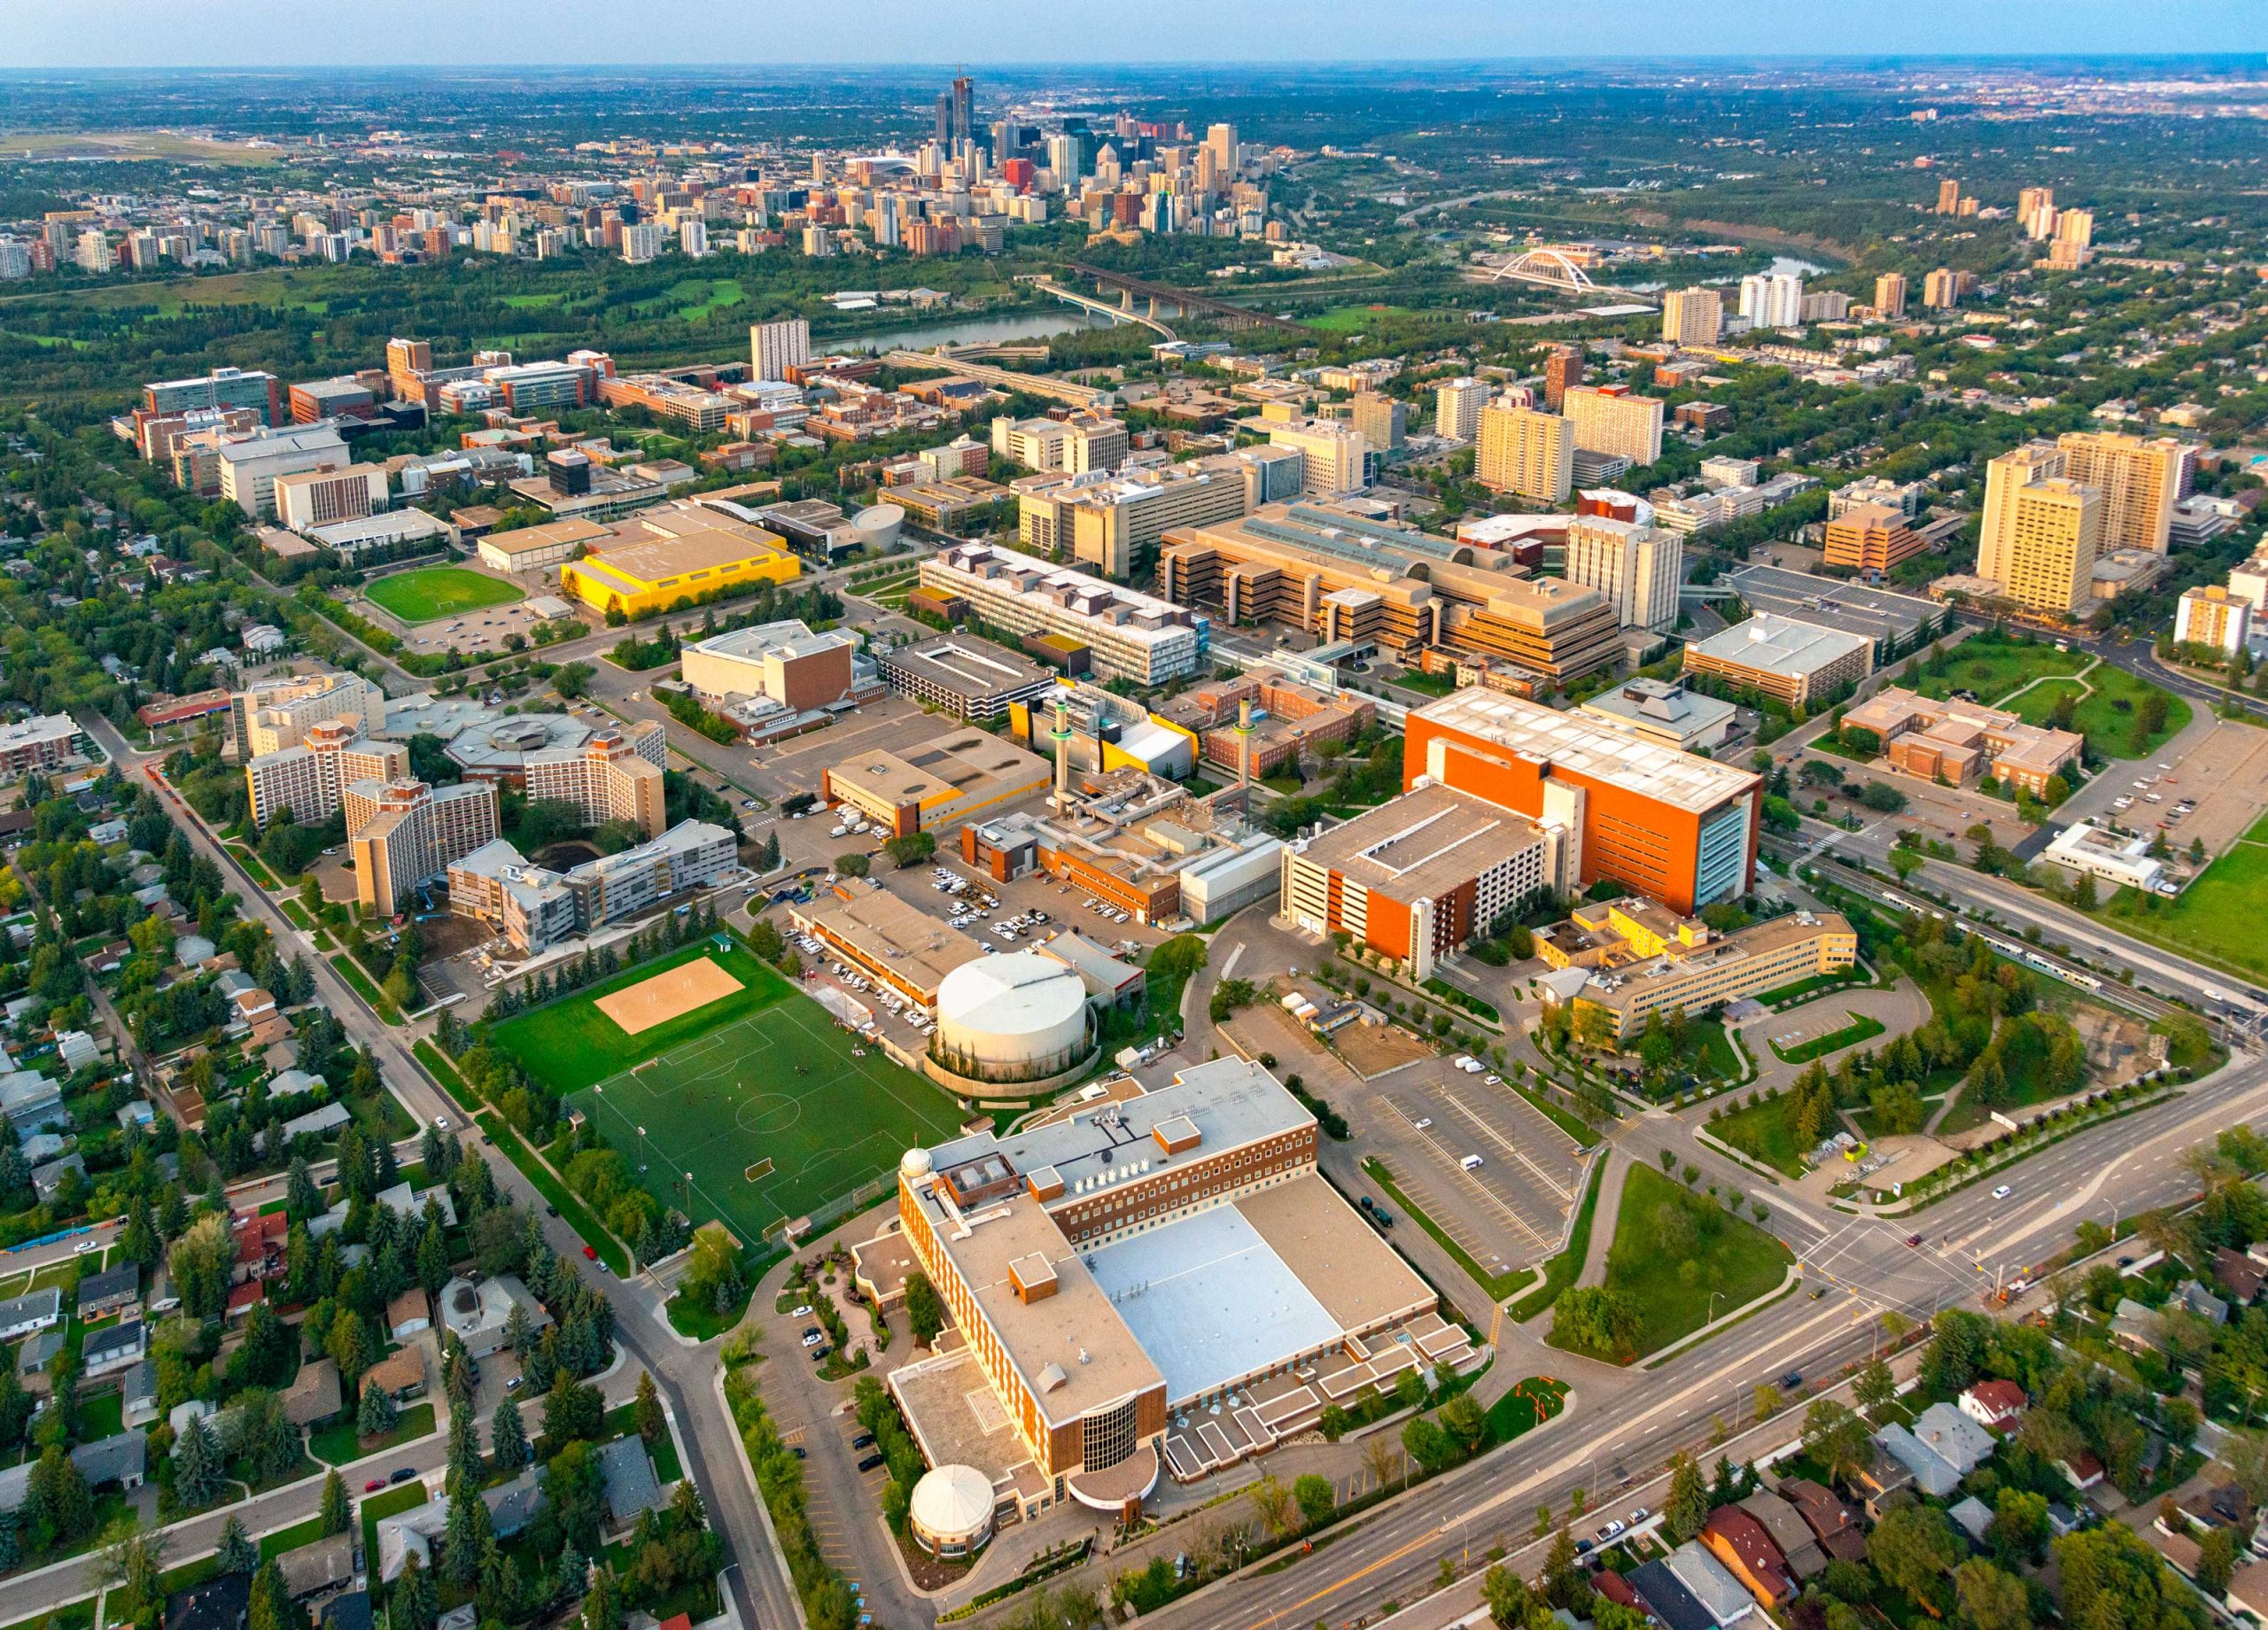 University of Alberta top 4 university in Canada. Contact HKIES